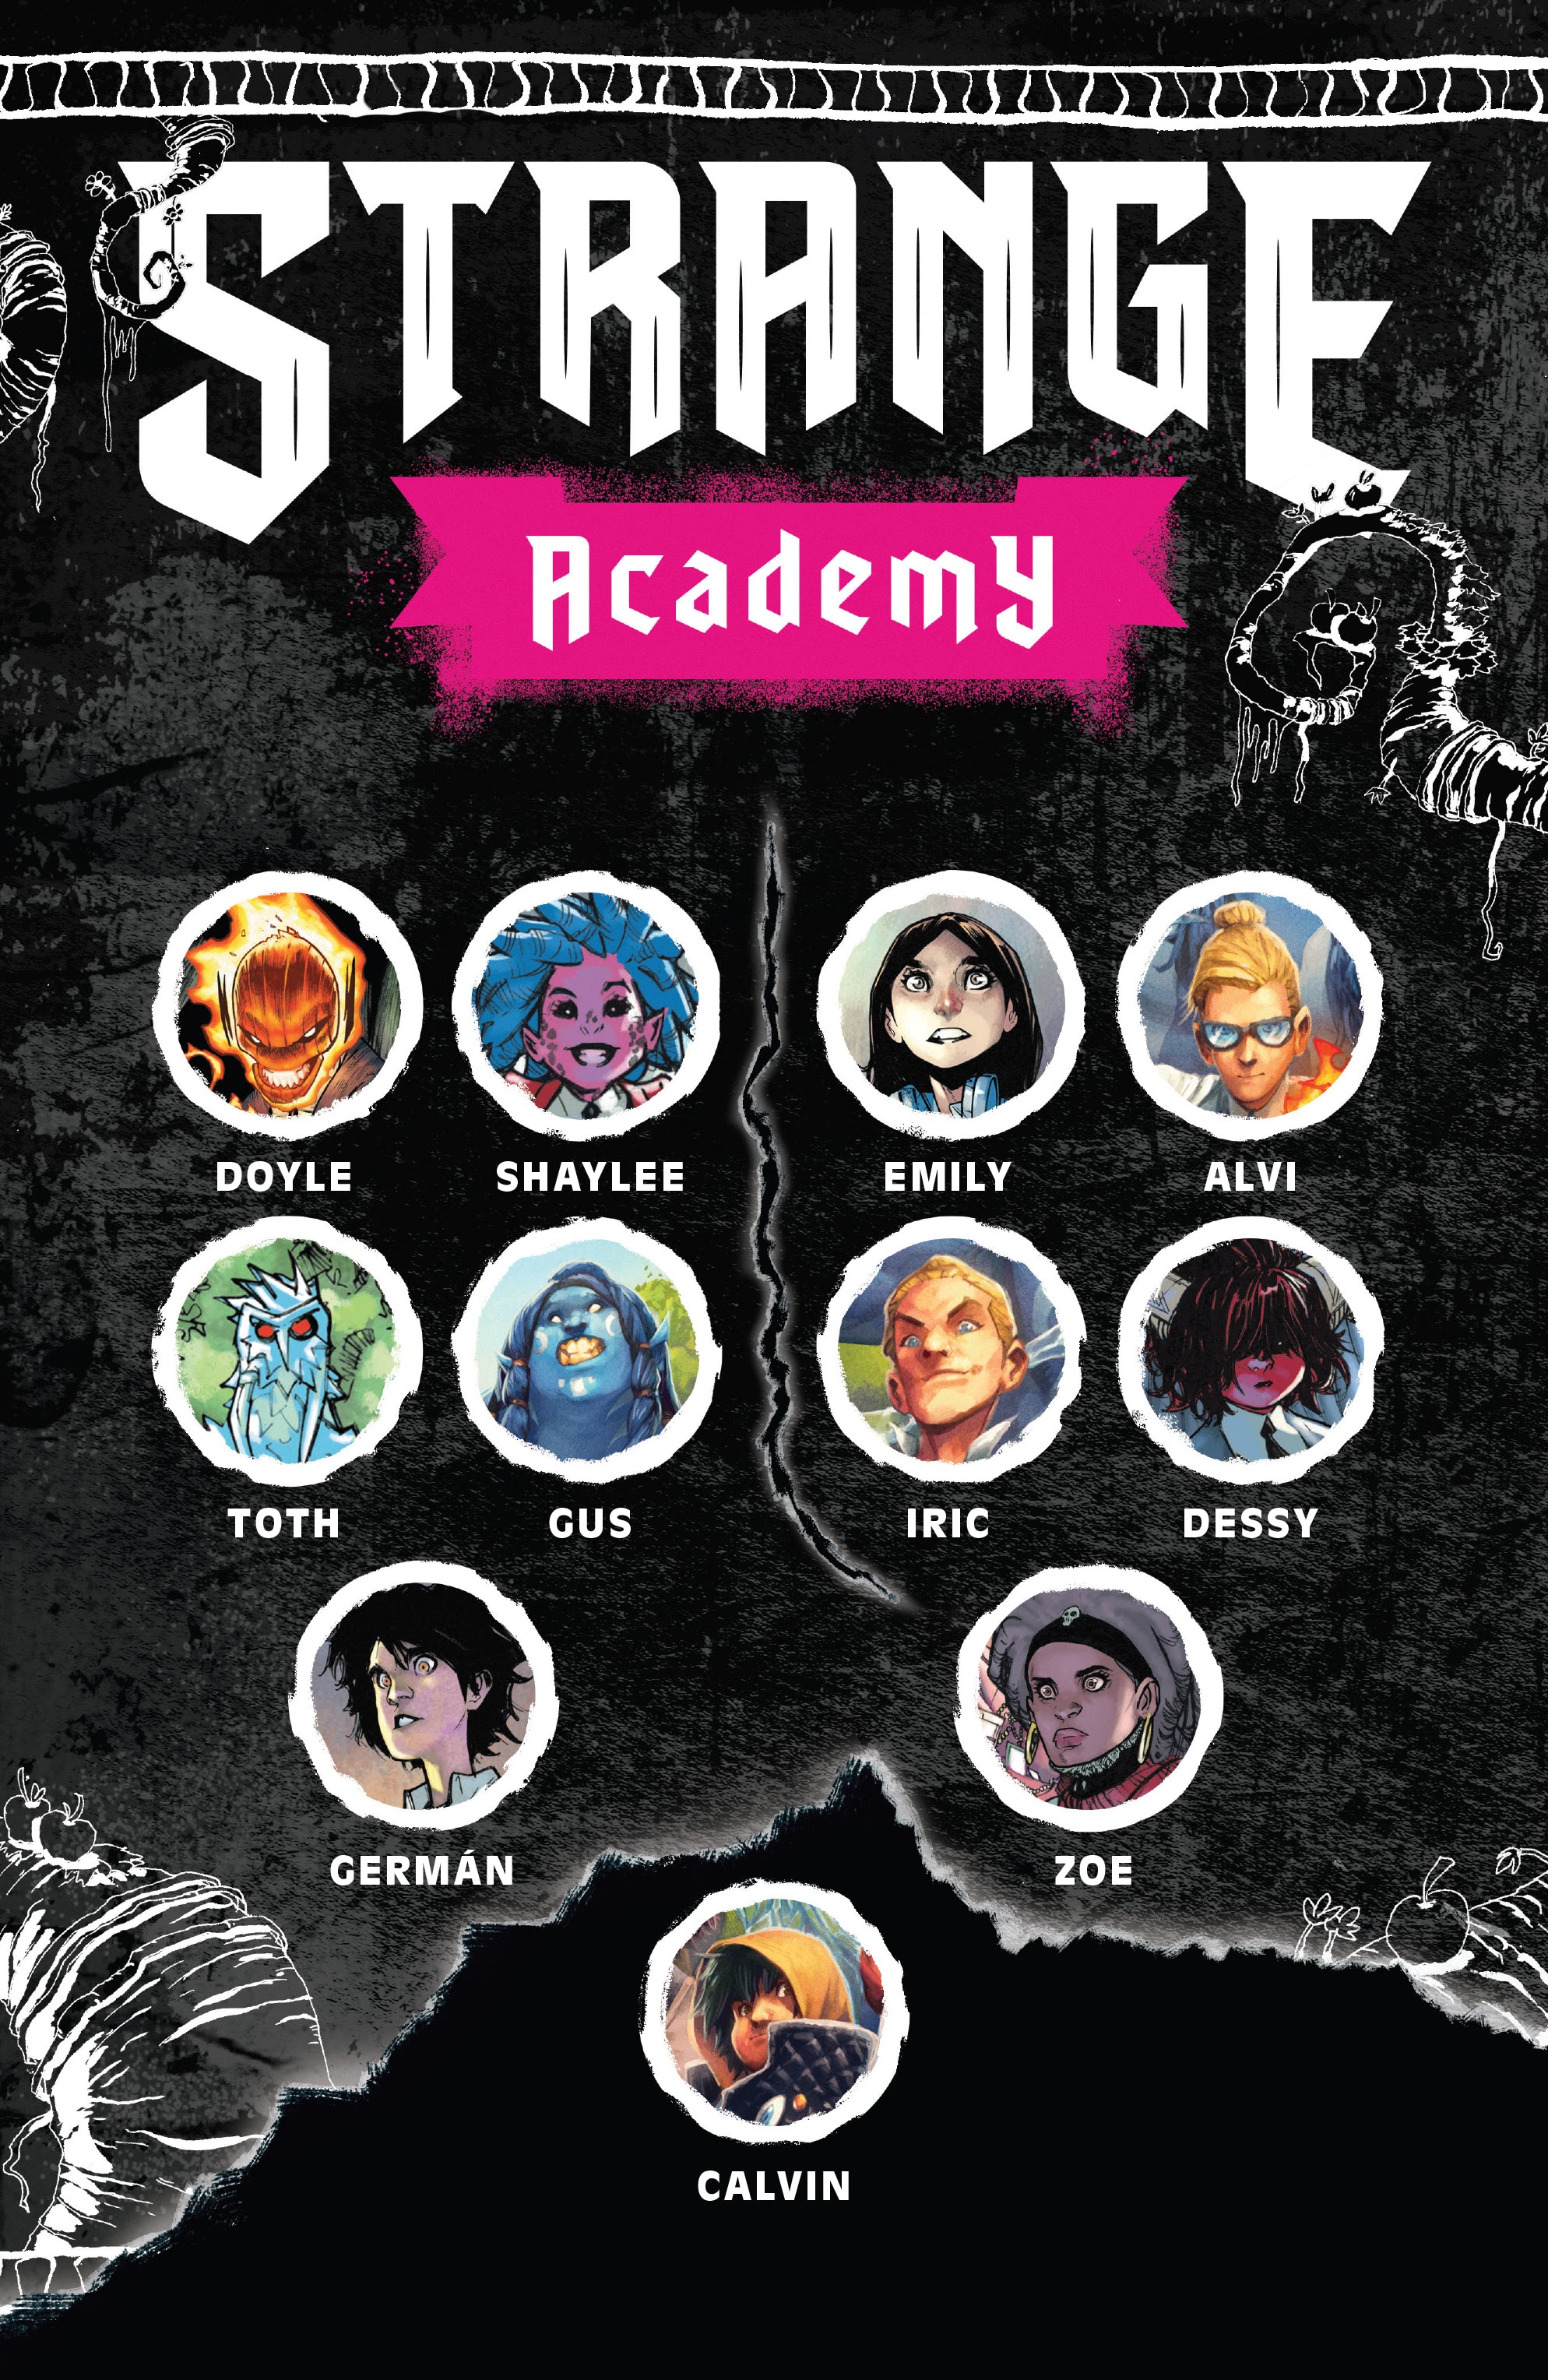 Read online Strange Academy: Finals comic -  Issue #1 - 3